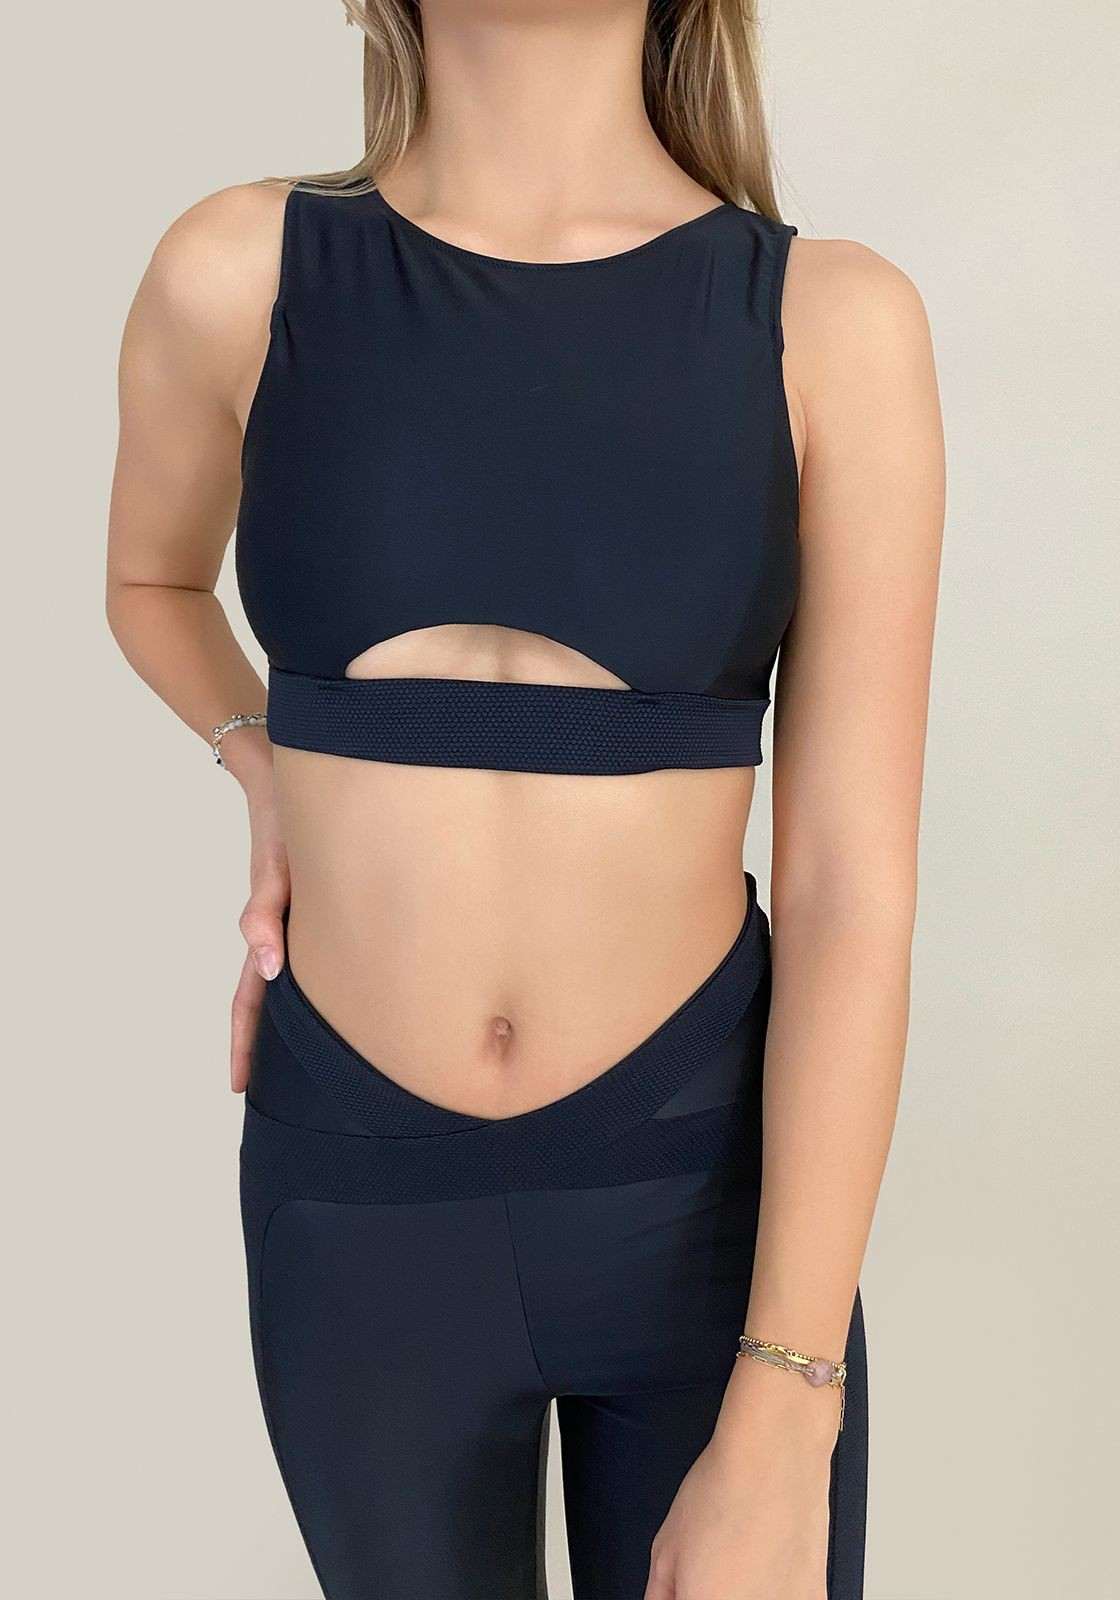 ELISE Black sport bra -  Active wear